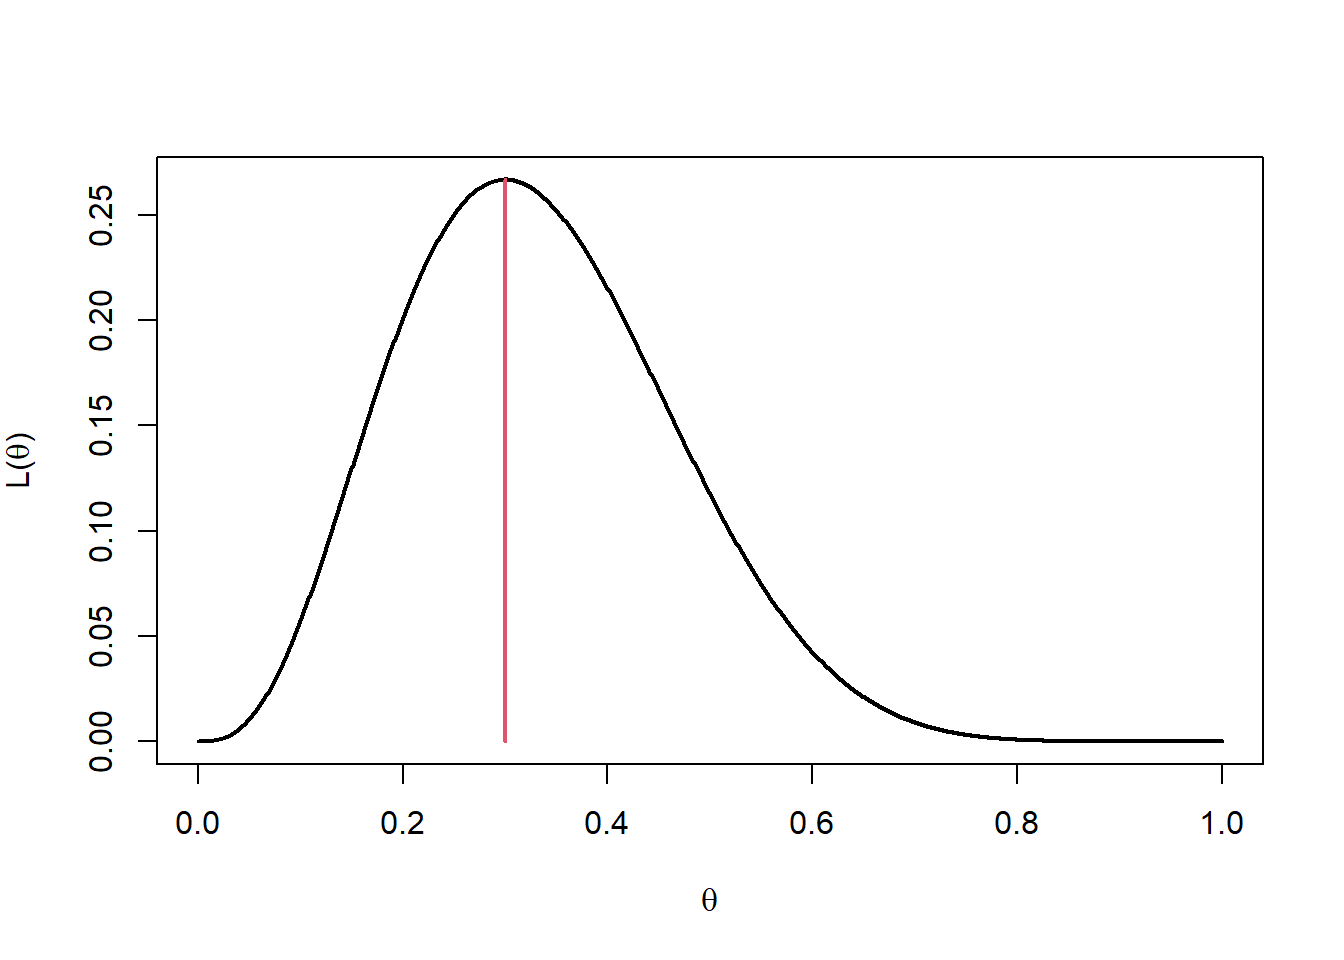 Likelihood function with MLE at 0.3.